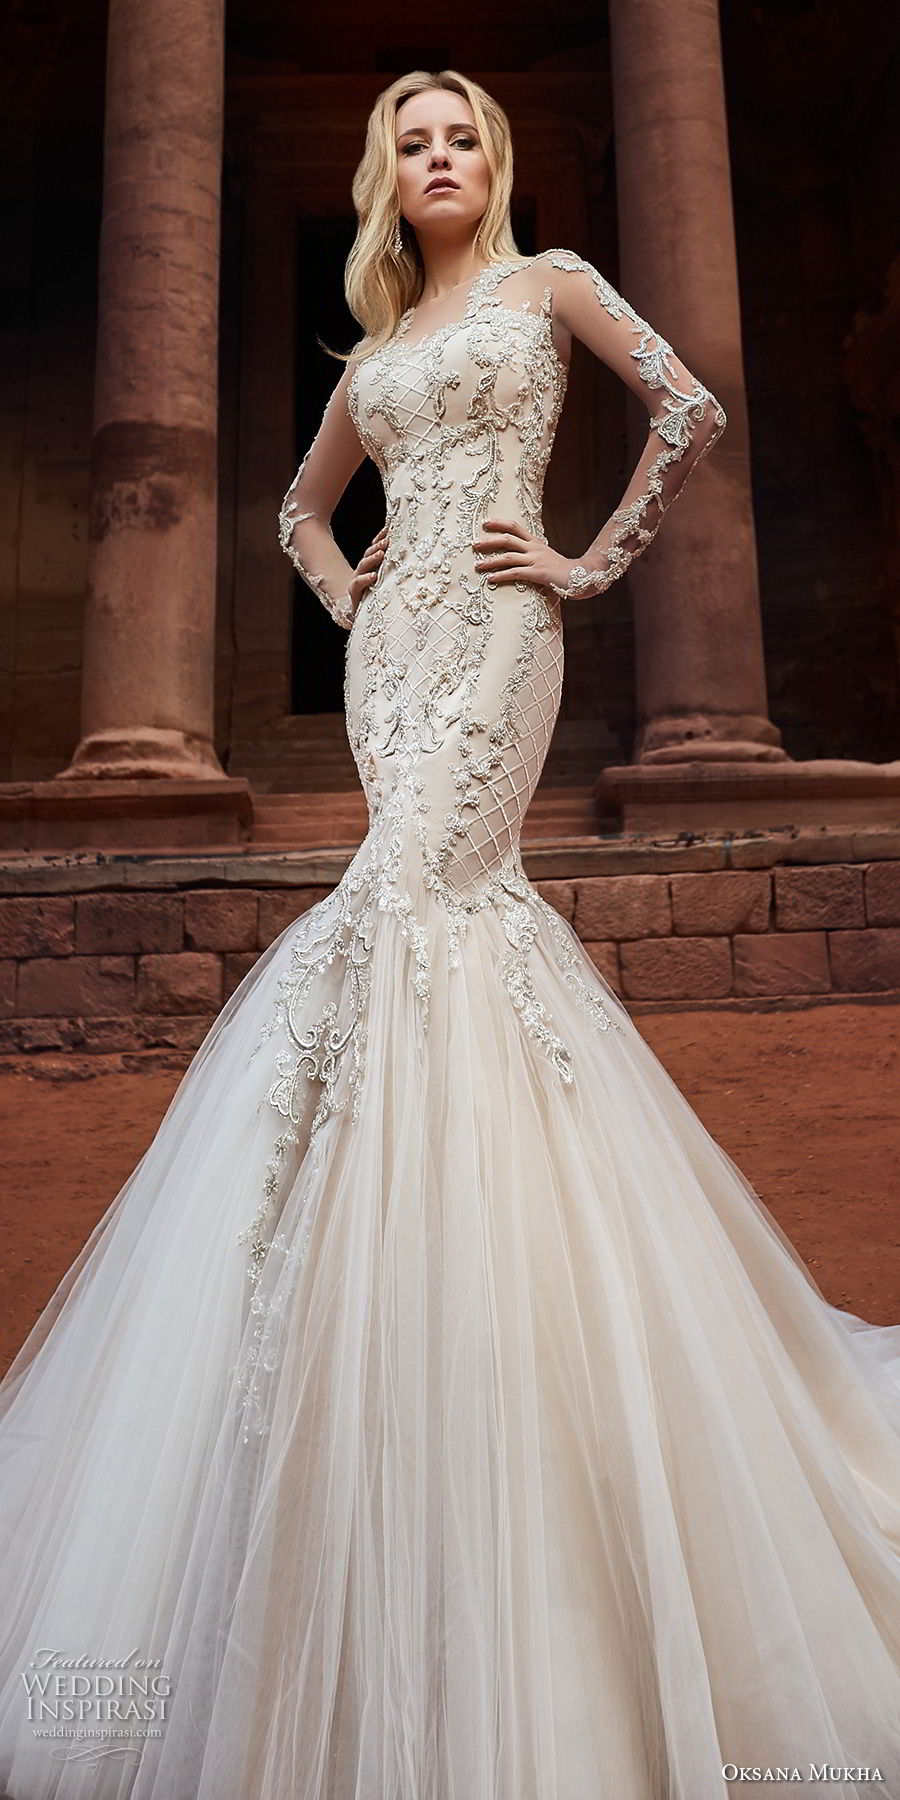 Armani Wedding Dresses – Fashion dresses